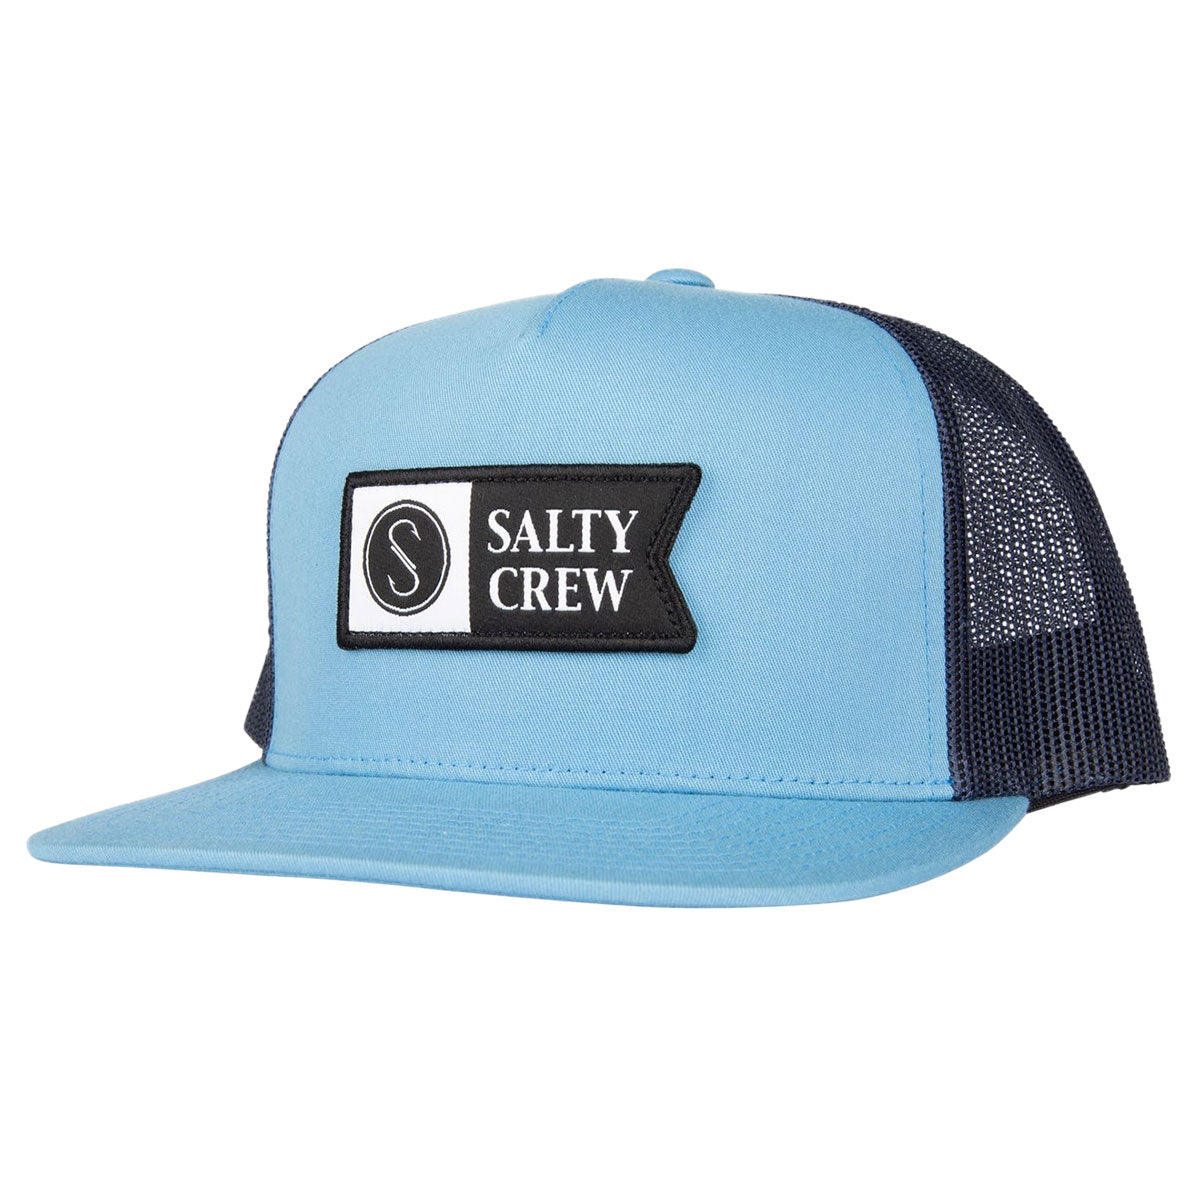 Salty Crew Alpha Twill Trucker Hat - Marine Blue image 1